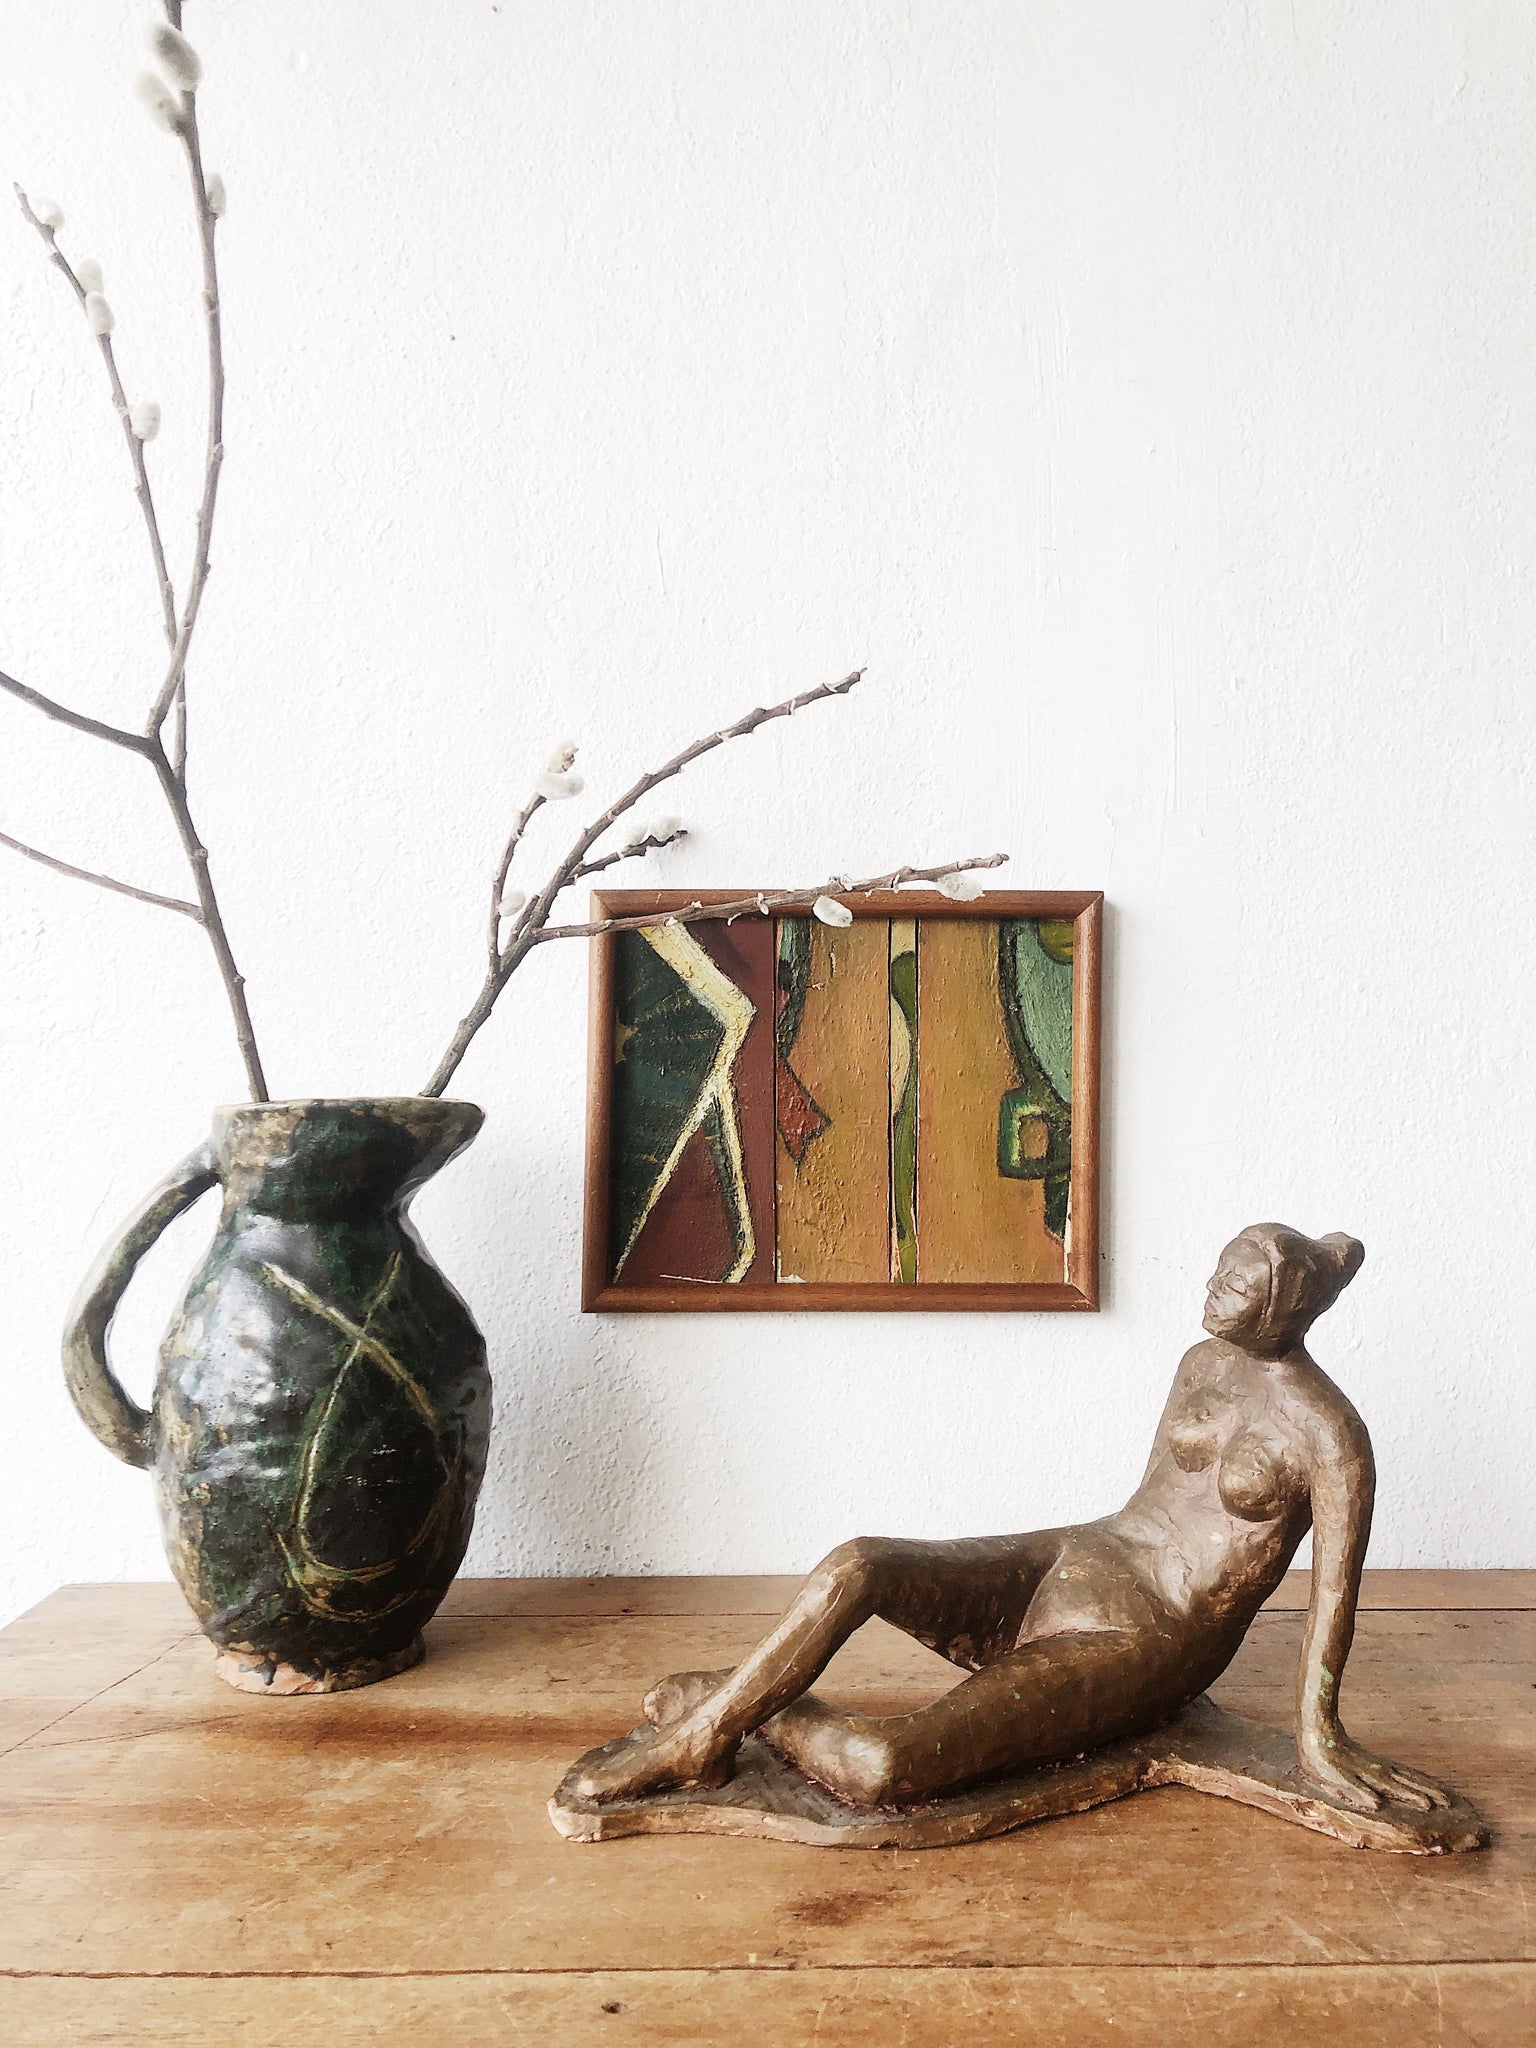 Vintage Handmade Ceramic Nude Sculpture